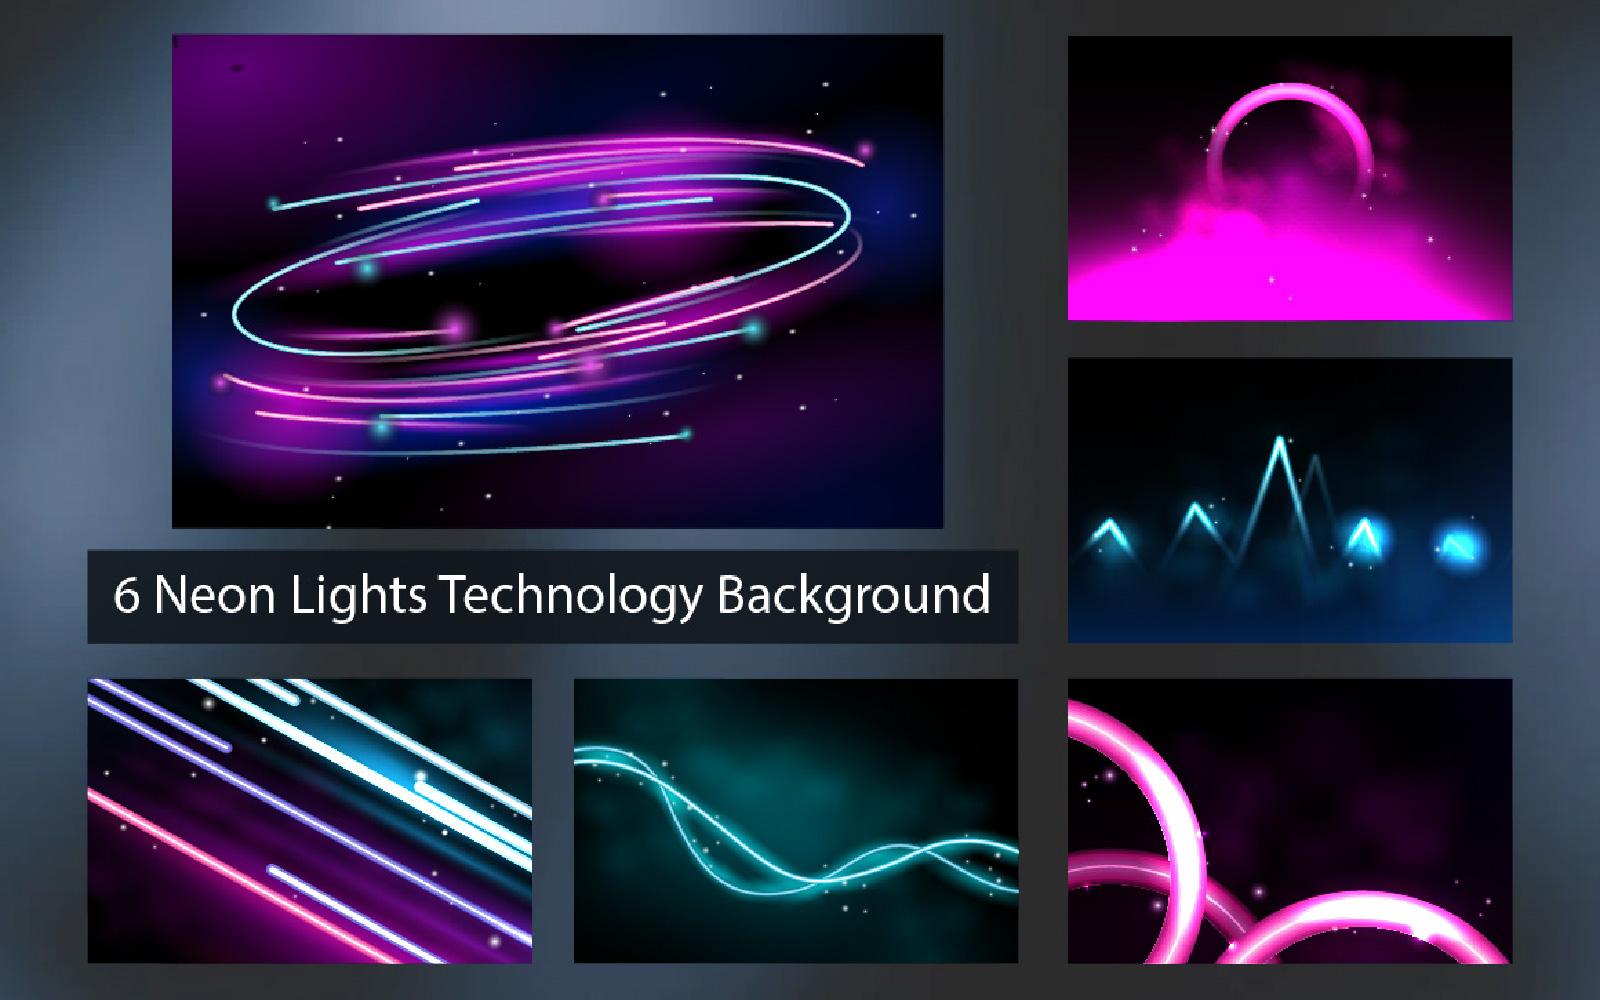 6 Neon Lights Technology Background